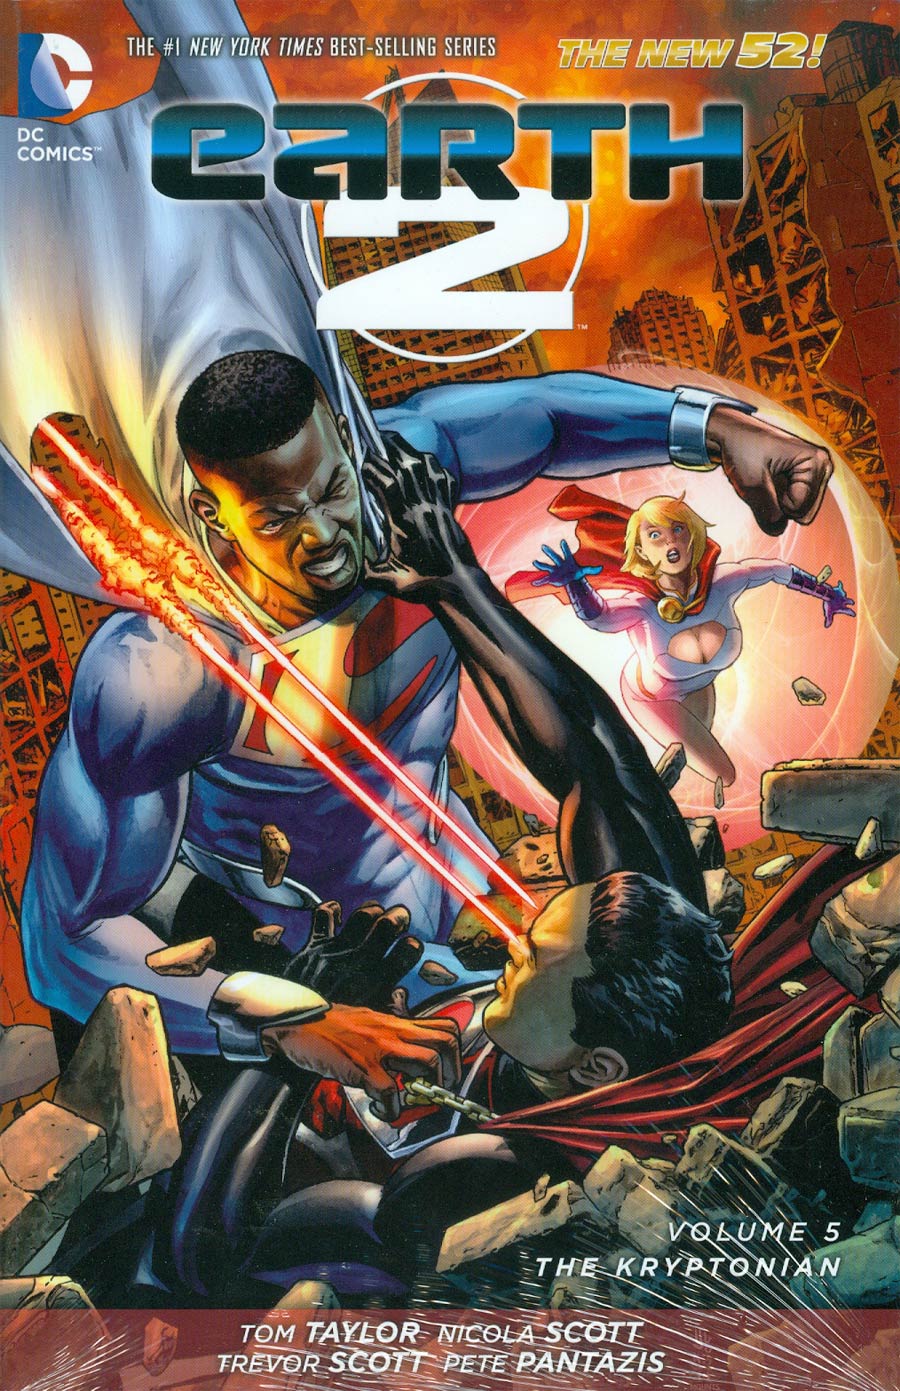 Earth 2 (New 52) Vol 5 The Kryptonian HC